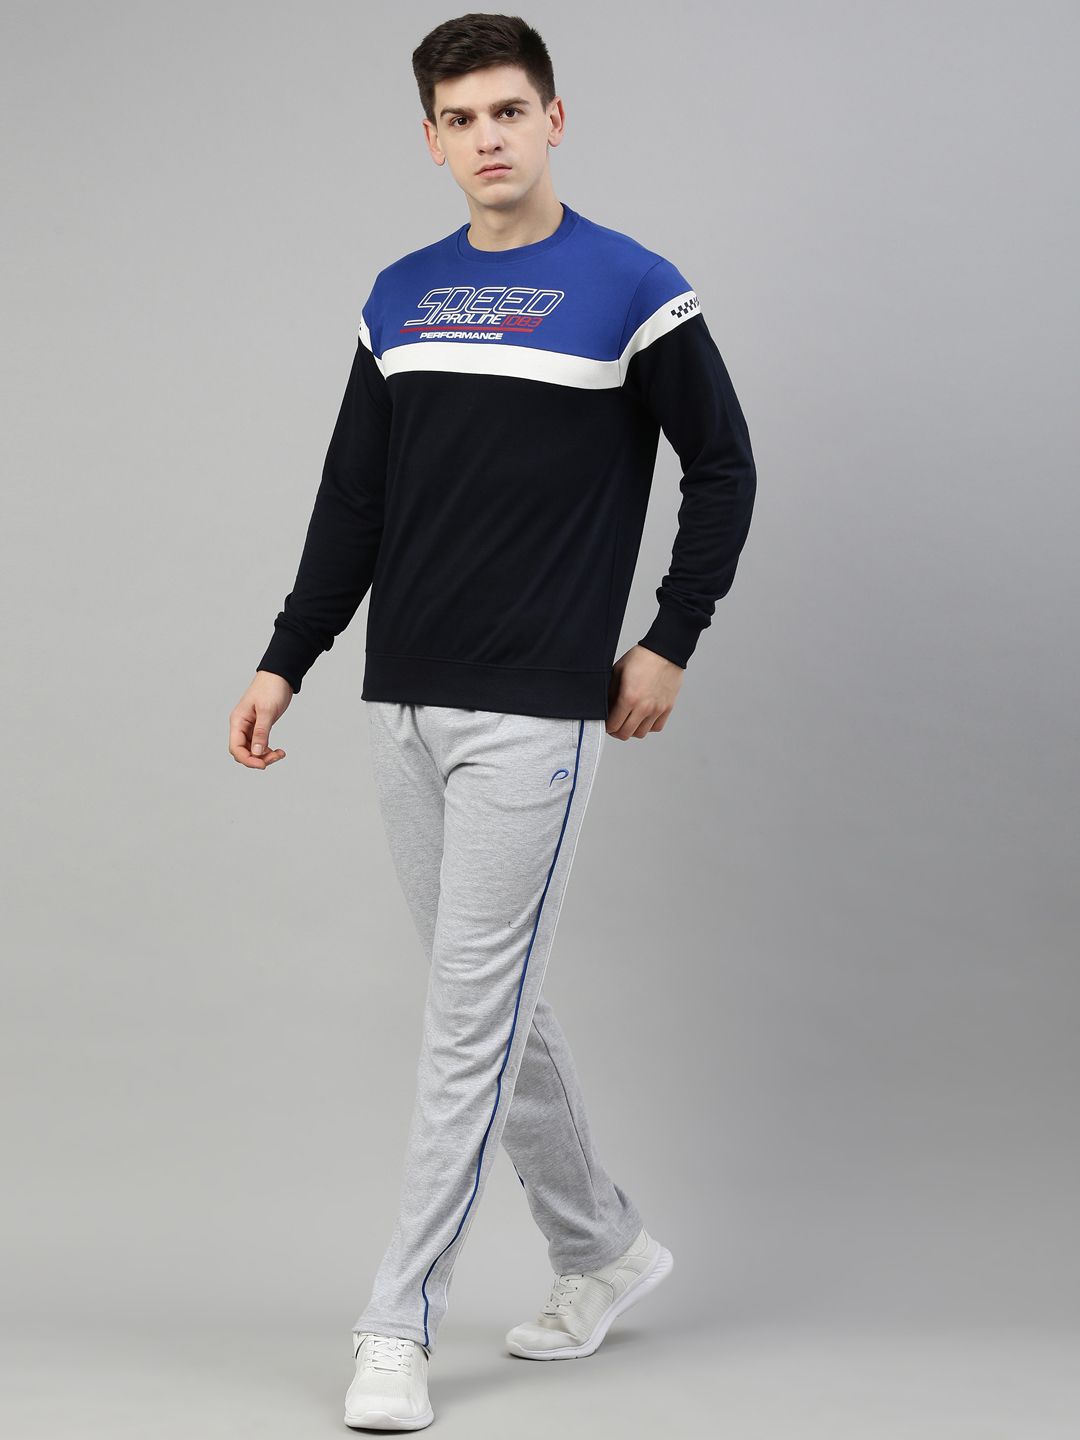 Striped Sweatpants Plain Design | Roupas casuais masculinas, Moletons  masculinos, Moda masculina dicas